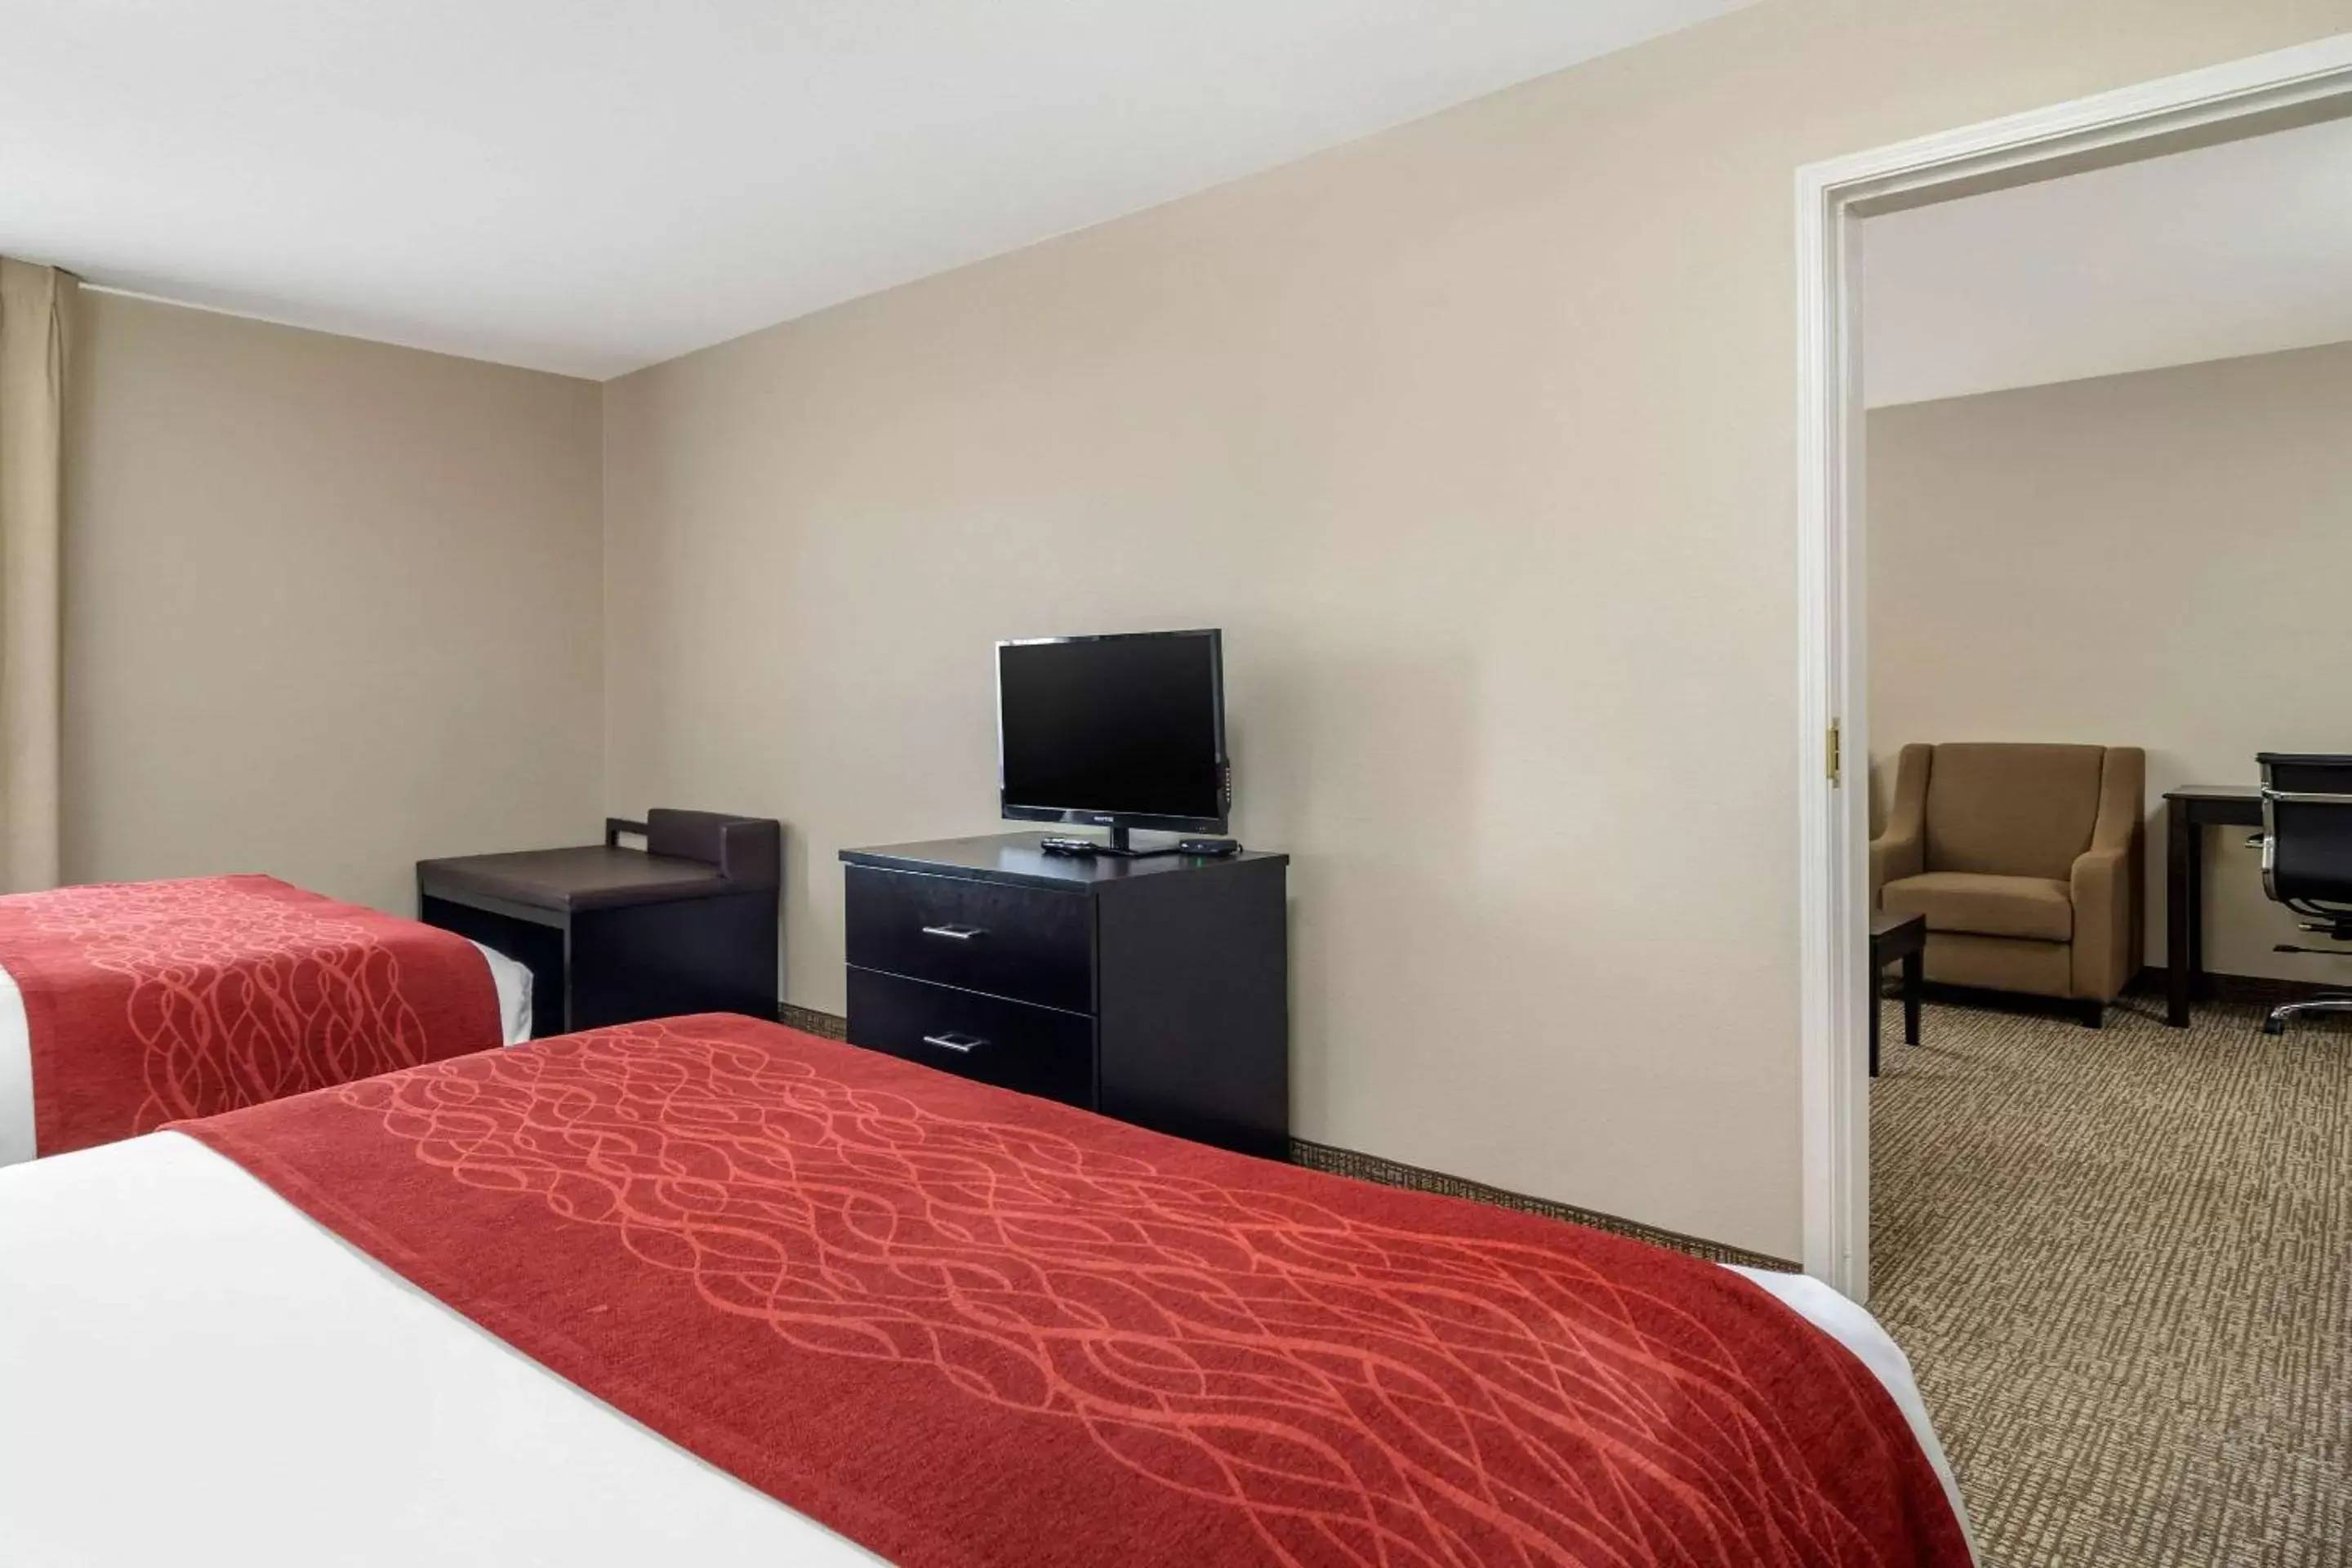 Bedroom, Room Photo in Comfort Inn & Suites Atlanta Smyrna